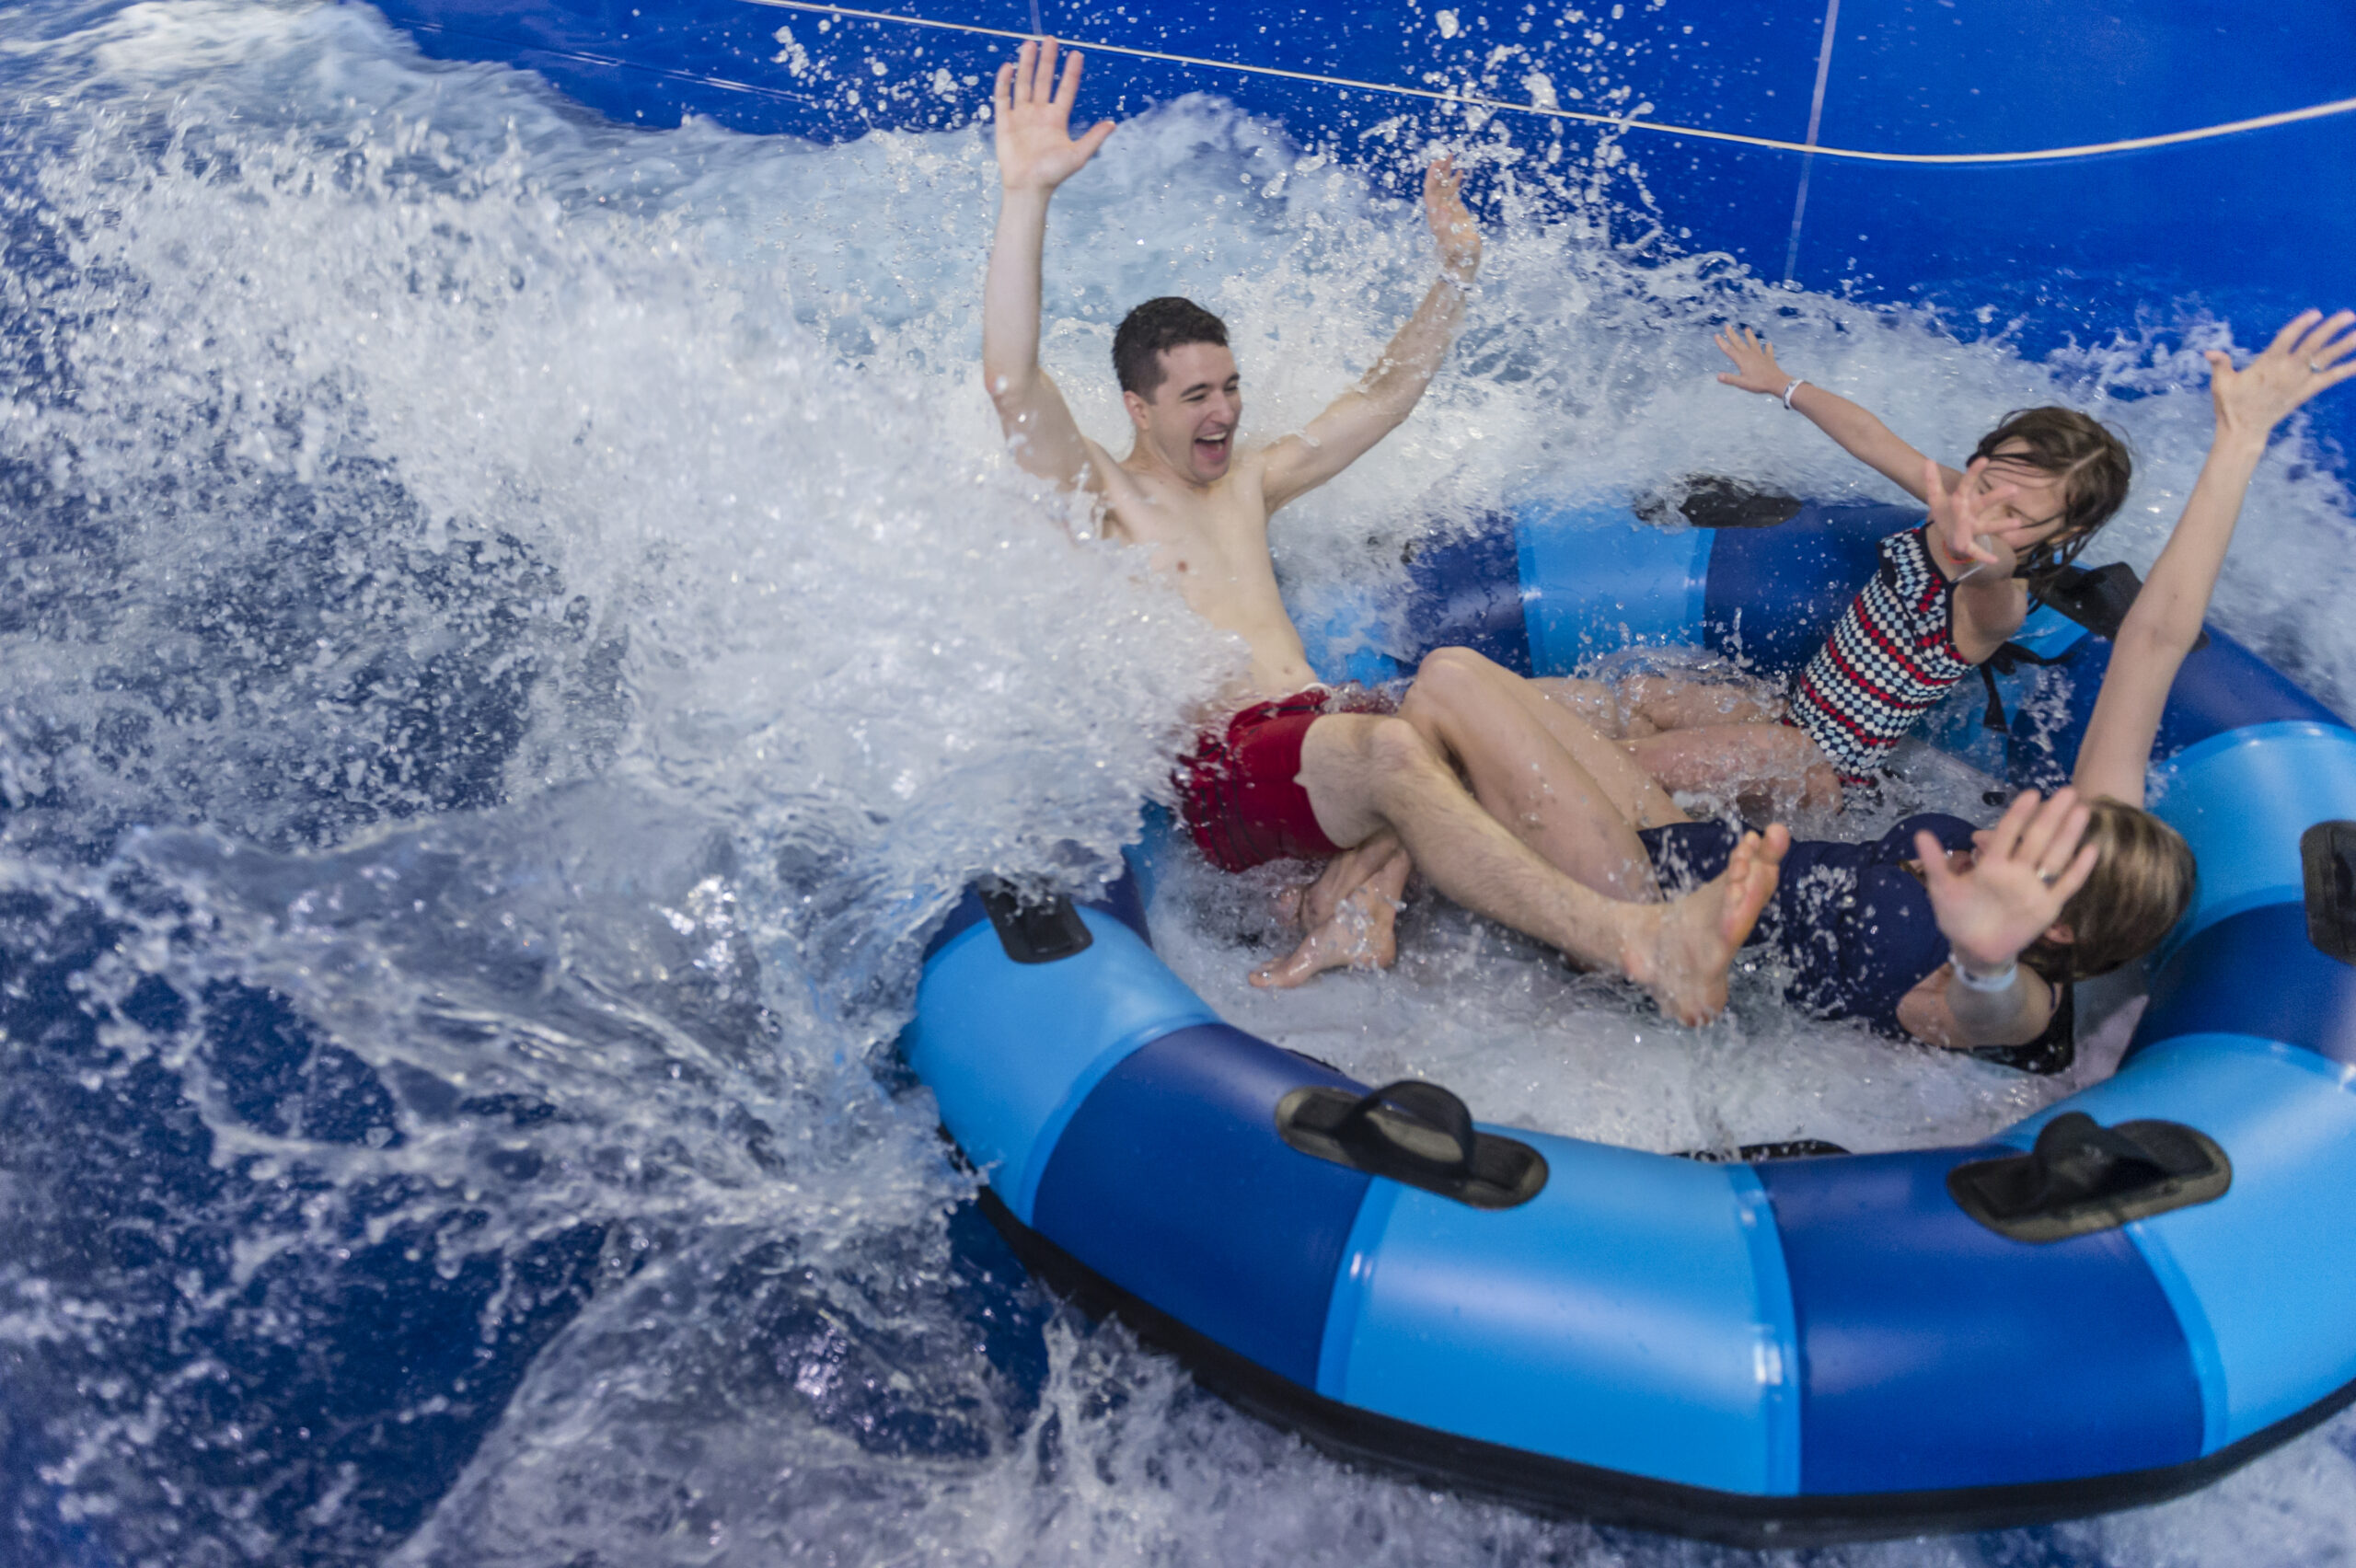 Kids enjoy an inner tube ride at Kalahari Resort, Pennsylvania